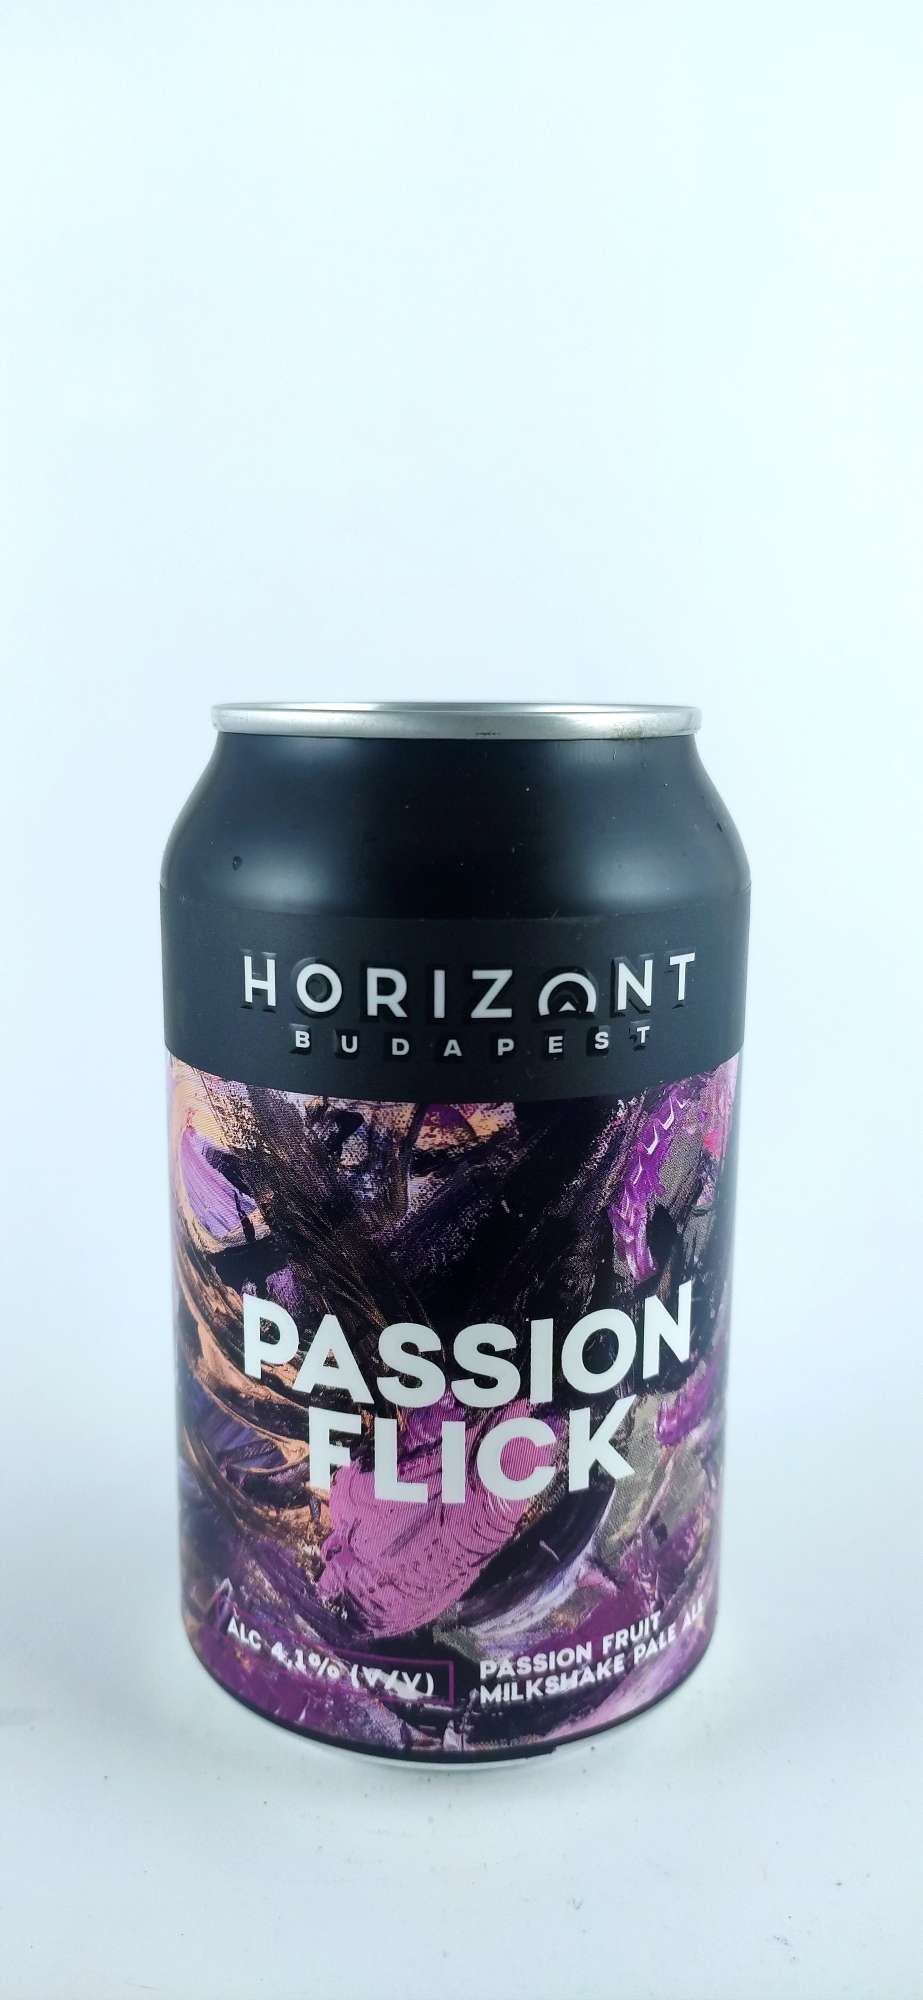 Horizont Passion Flick Milkshake Pale Ale